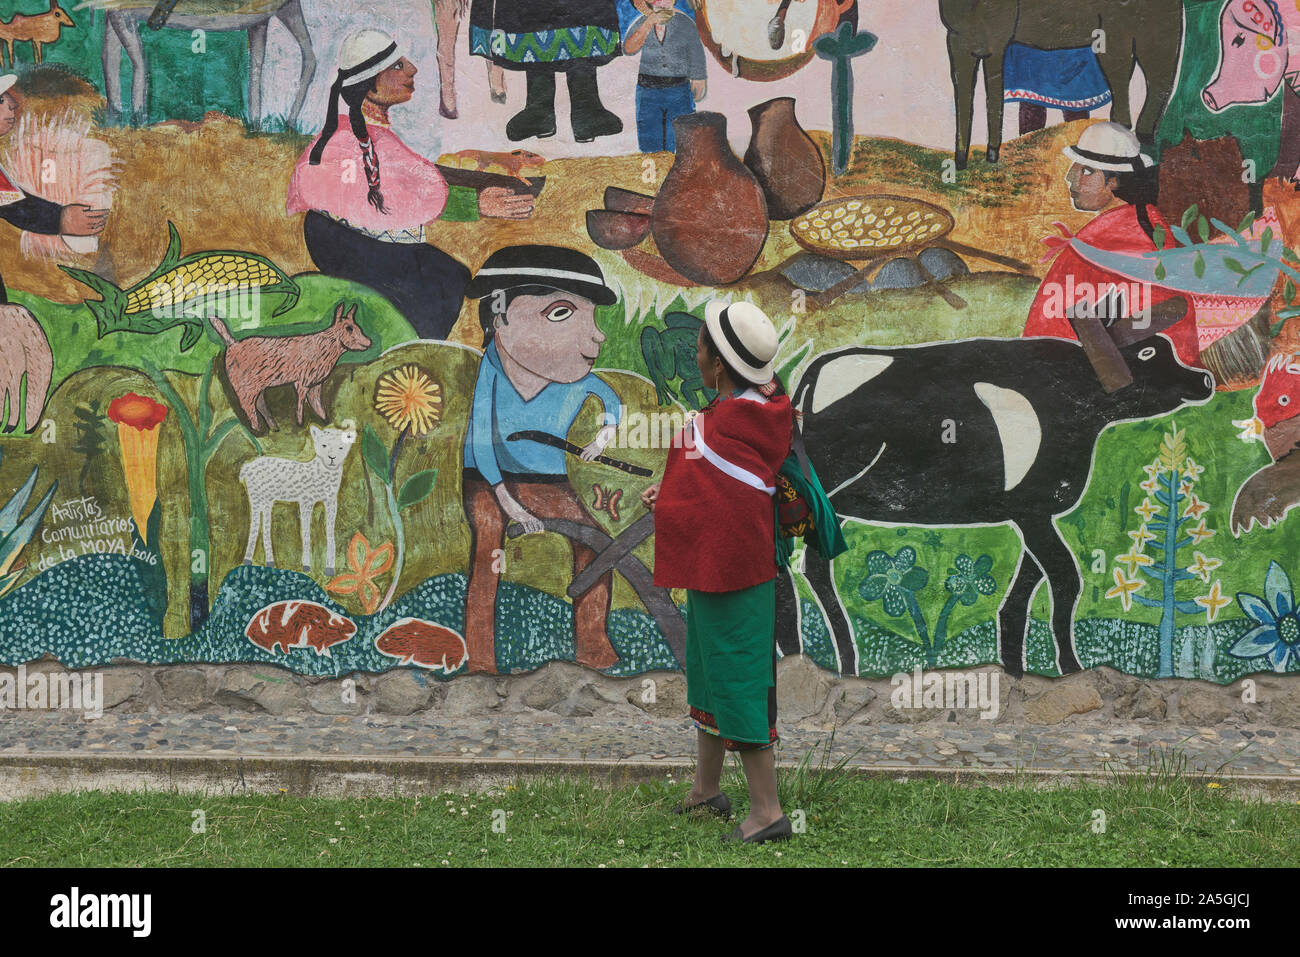 Indigenous highlander admiring a local mural, La Moya, Ecuador Stock Photo